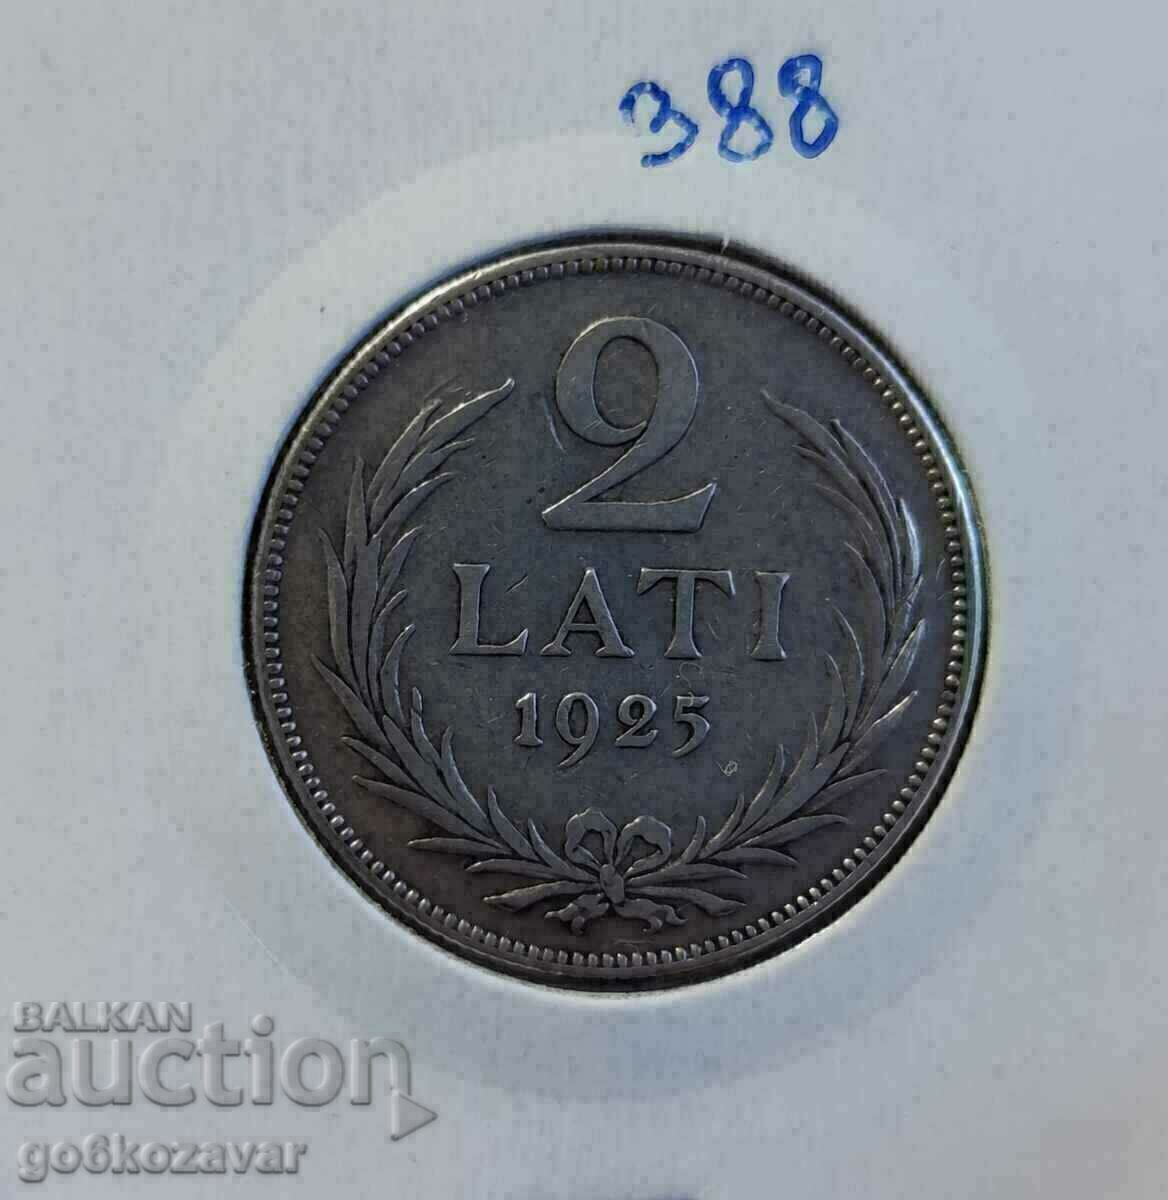 Letonia 2 lats 1925 Argint!